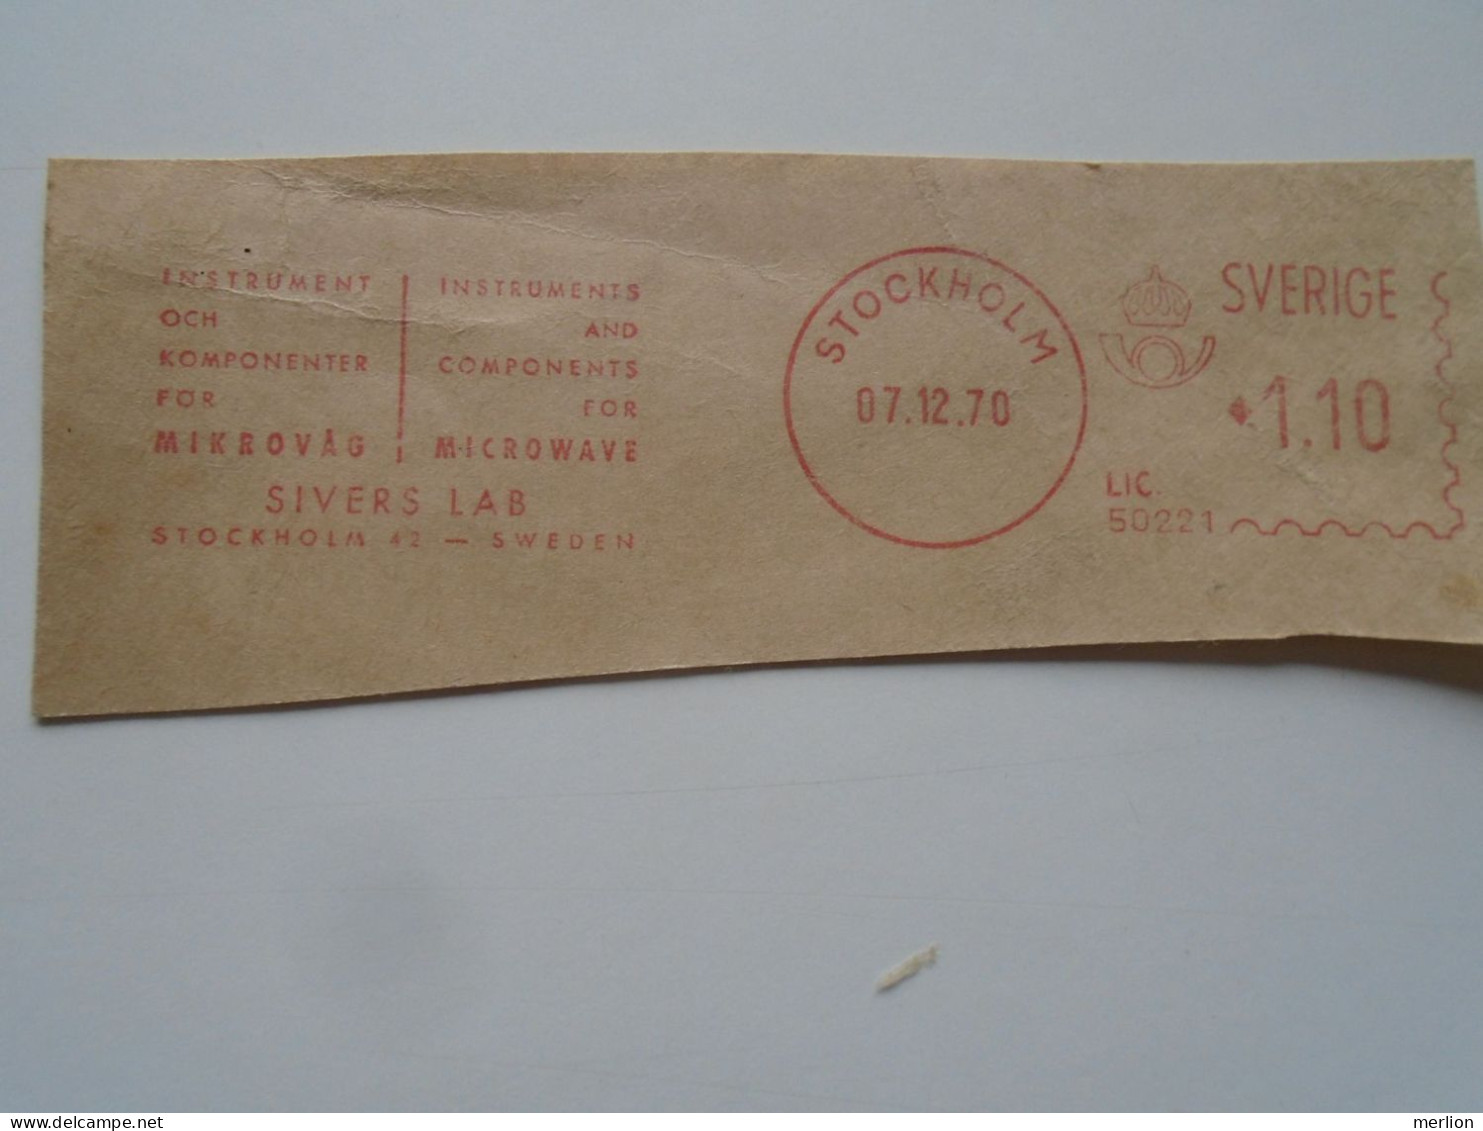 D200358  Red  Meter Stamp Cut- EMA - Freistempel  -1970  Components Fro Microwave   -Sweden  Stockholm  -Electro - Vignette [ATM]